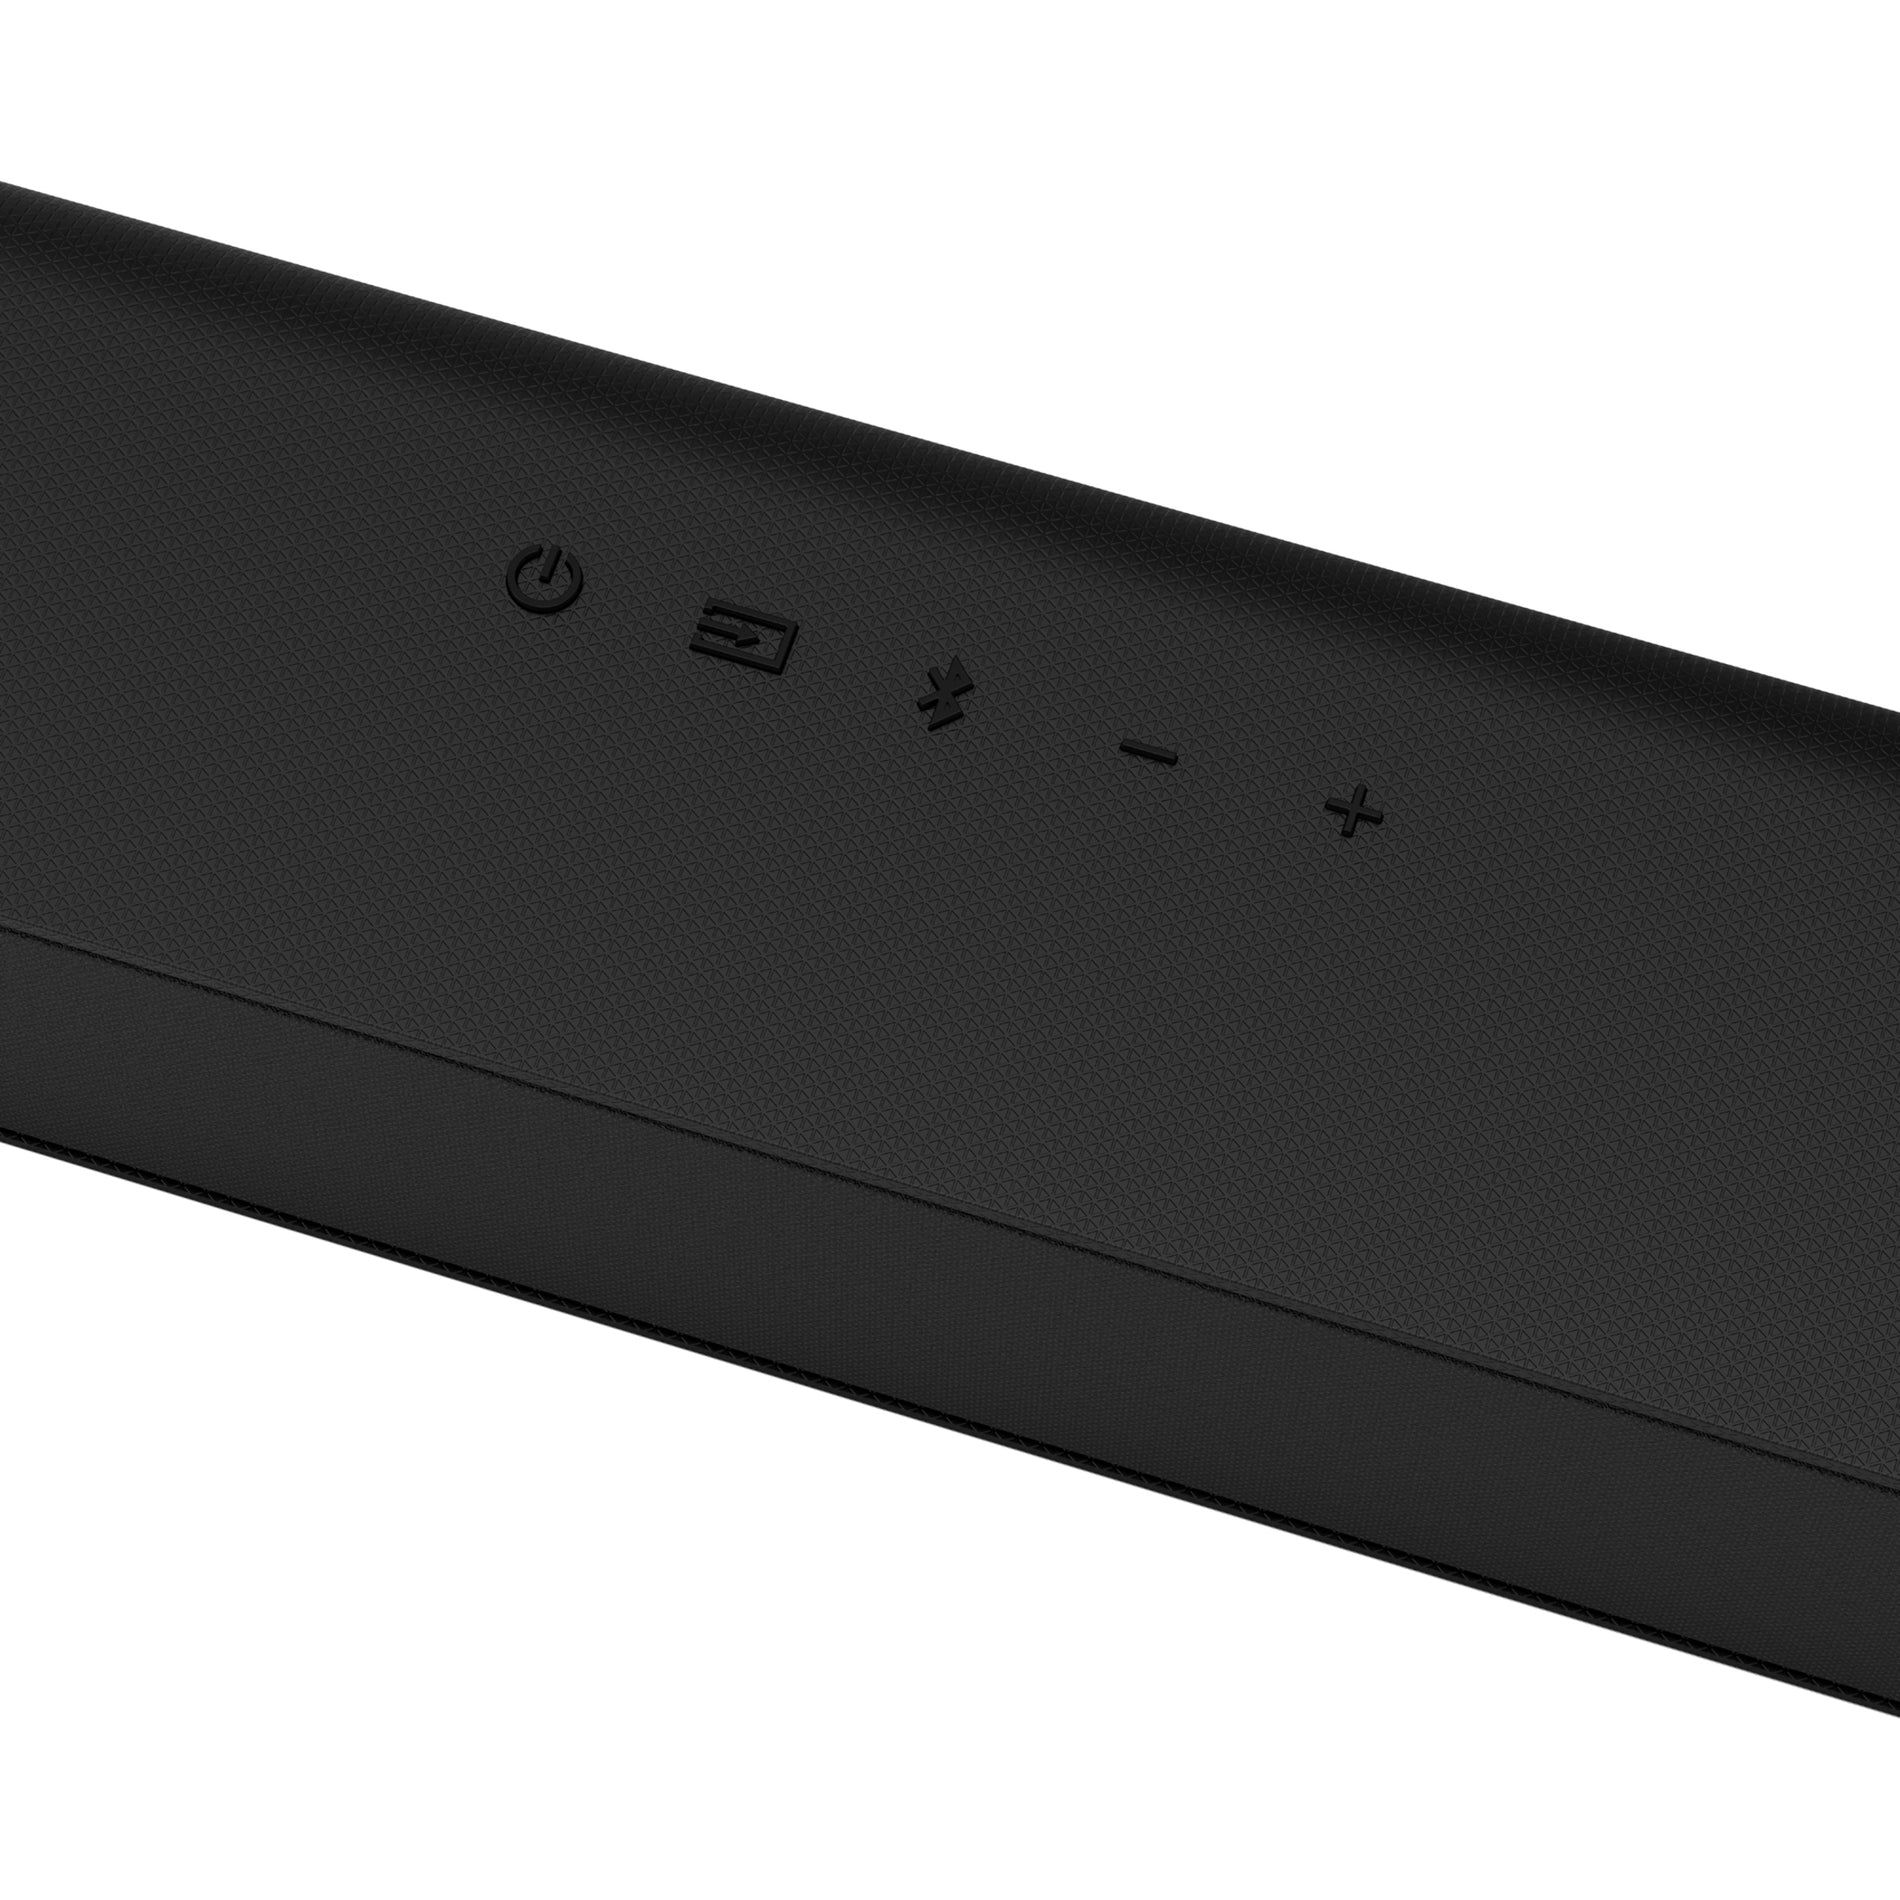 VIZIO V51-H6 V-Series 5.1 Home Theater Sound Bar, Bluetooth Smart Speaker - Alexa, Google Assistant, Siri Supported, Black